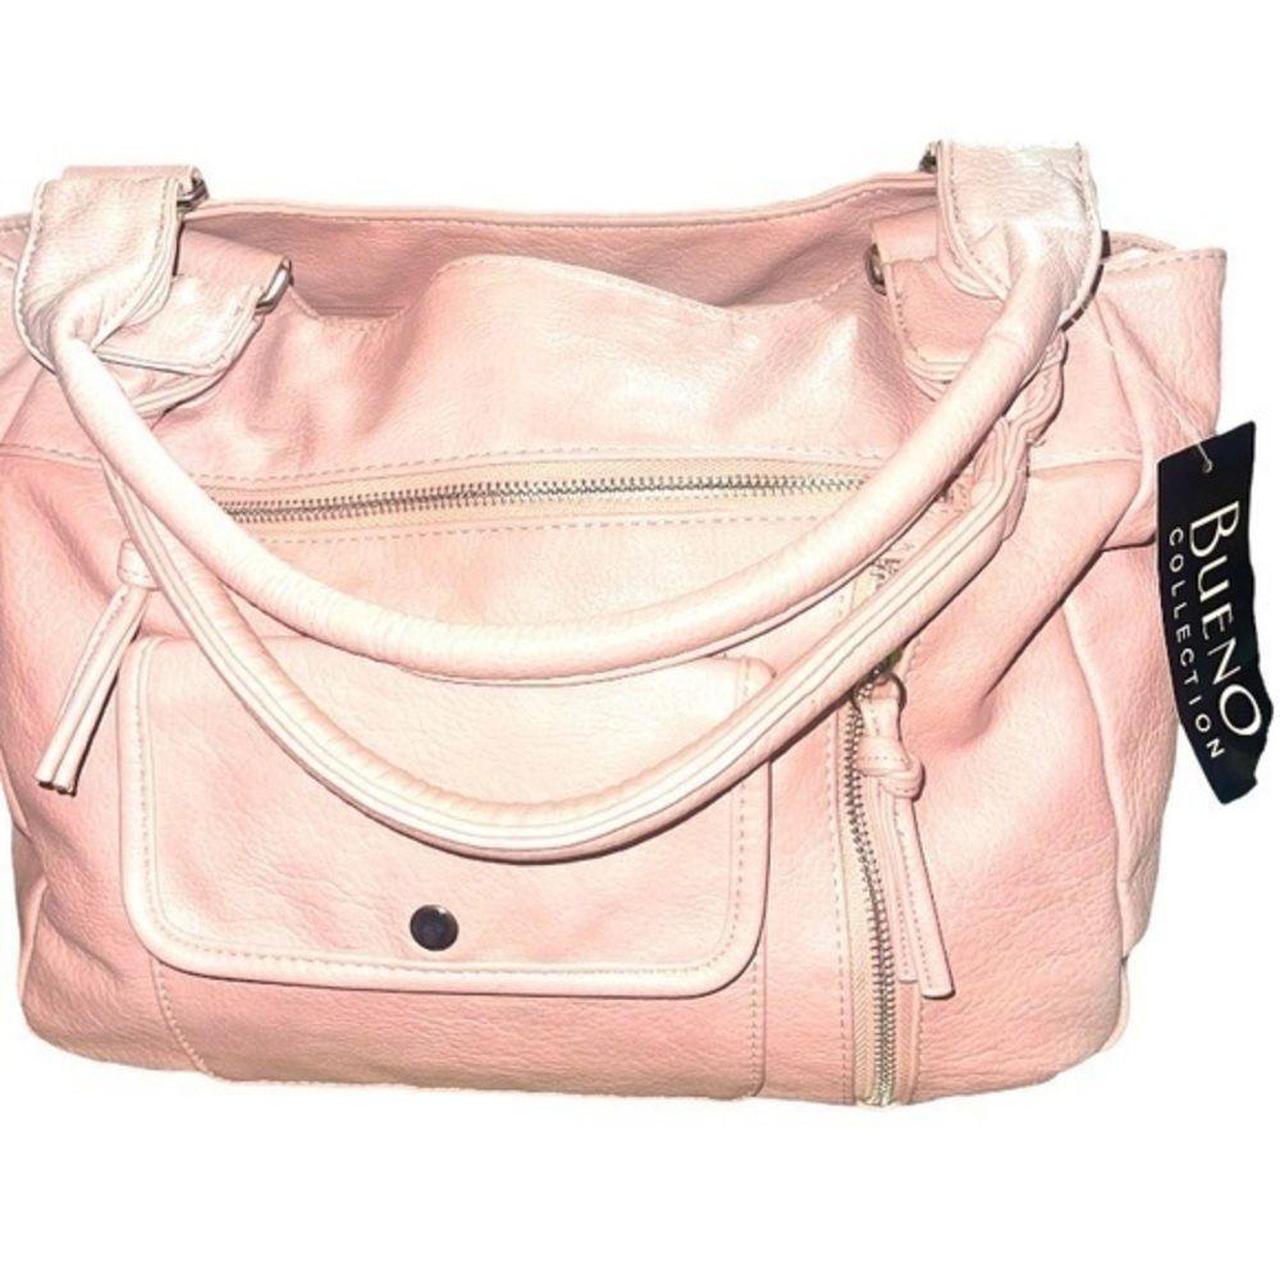 BRAND NEW PURSE. Soft leather purse. Beautiful Soft... - Depop